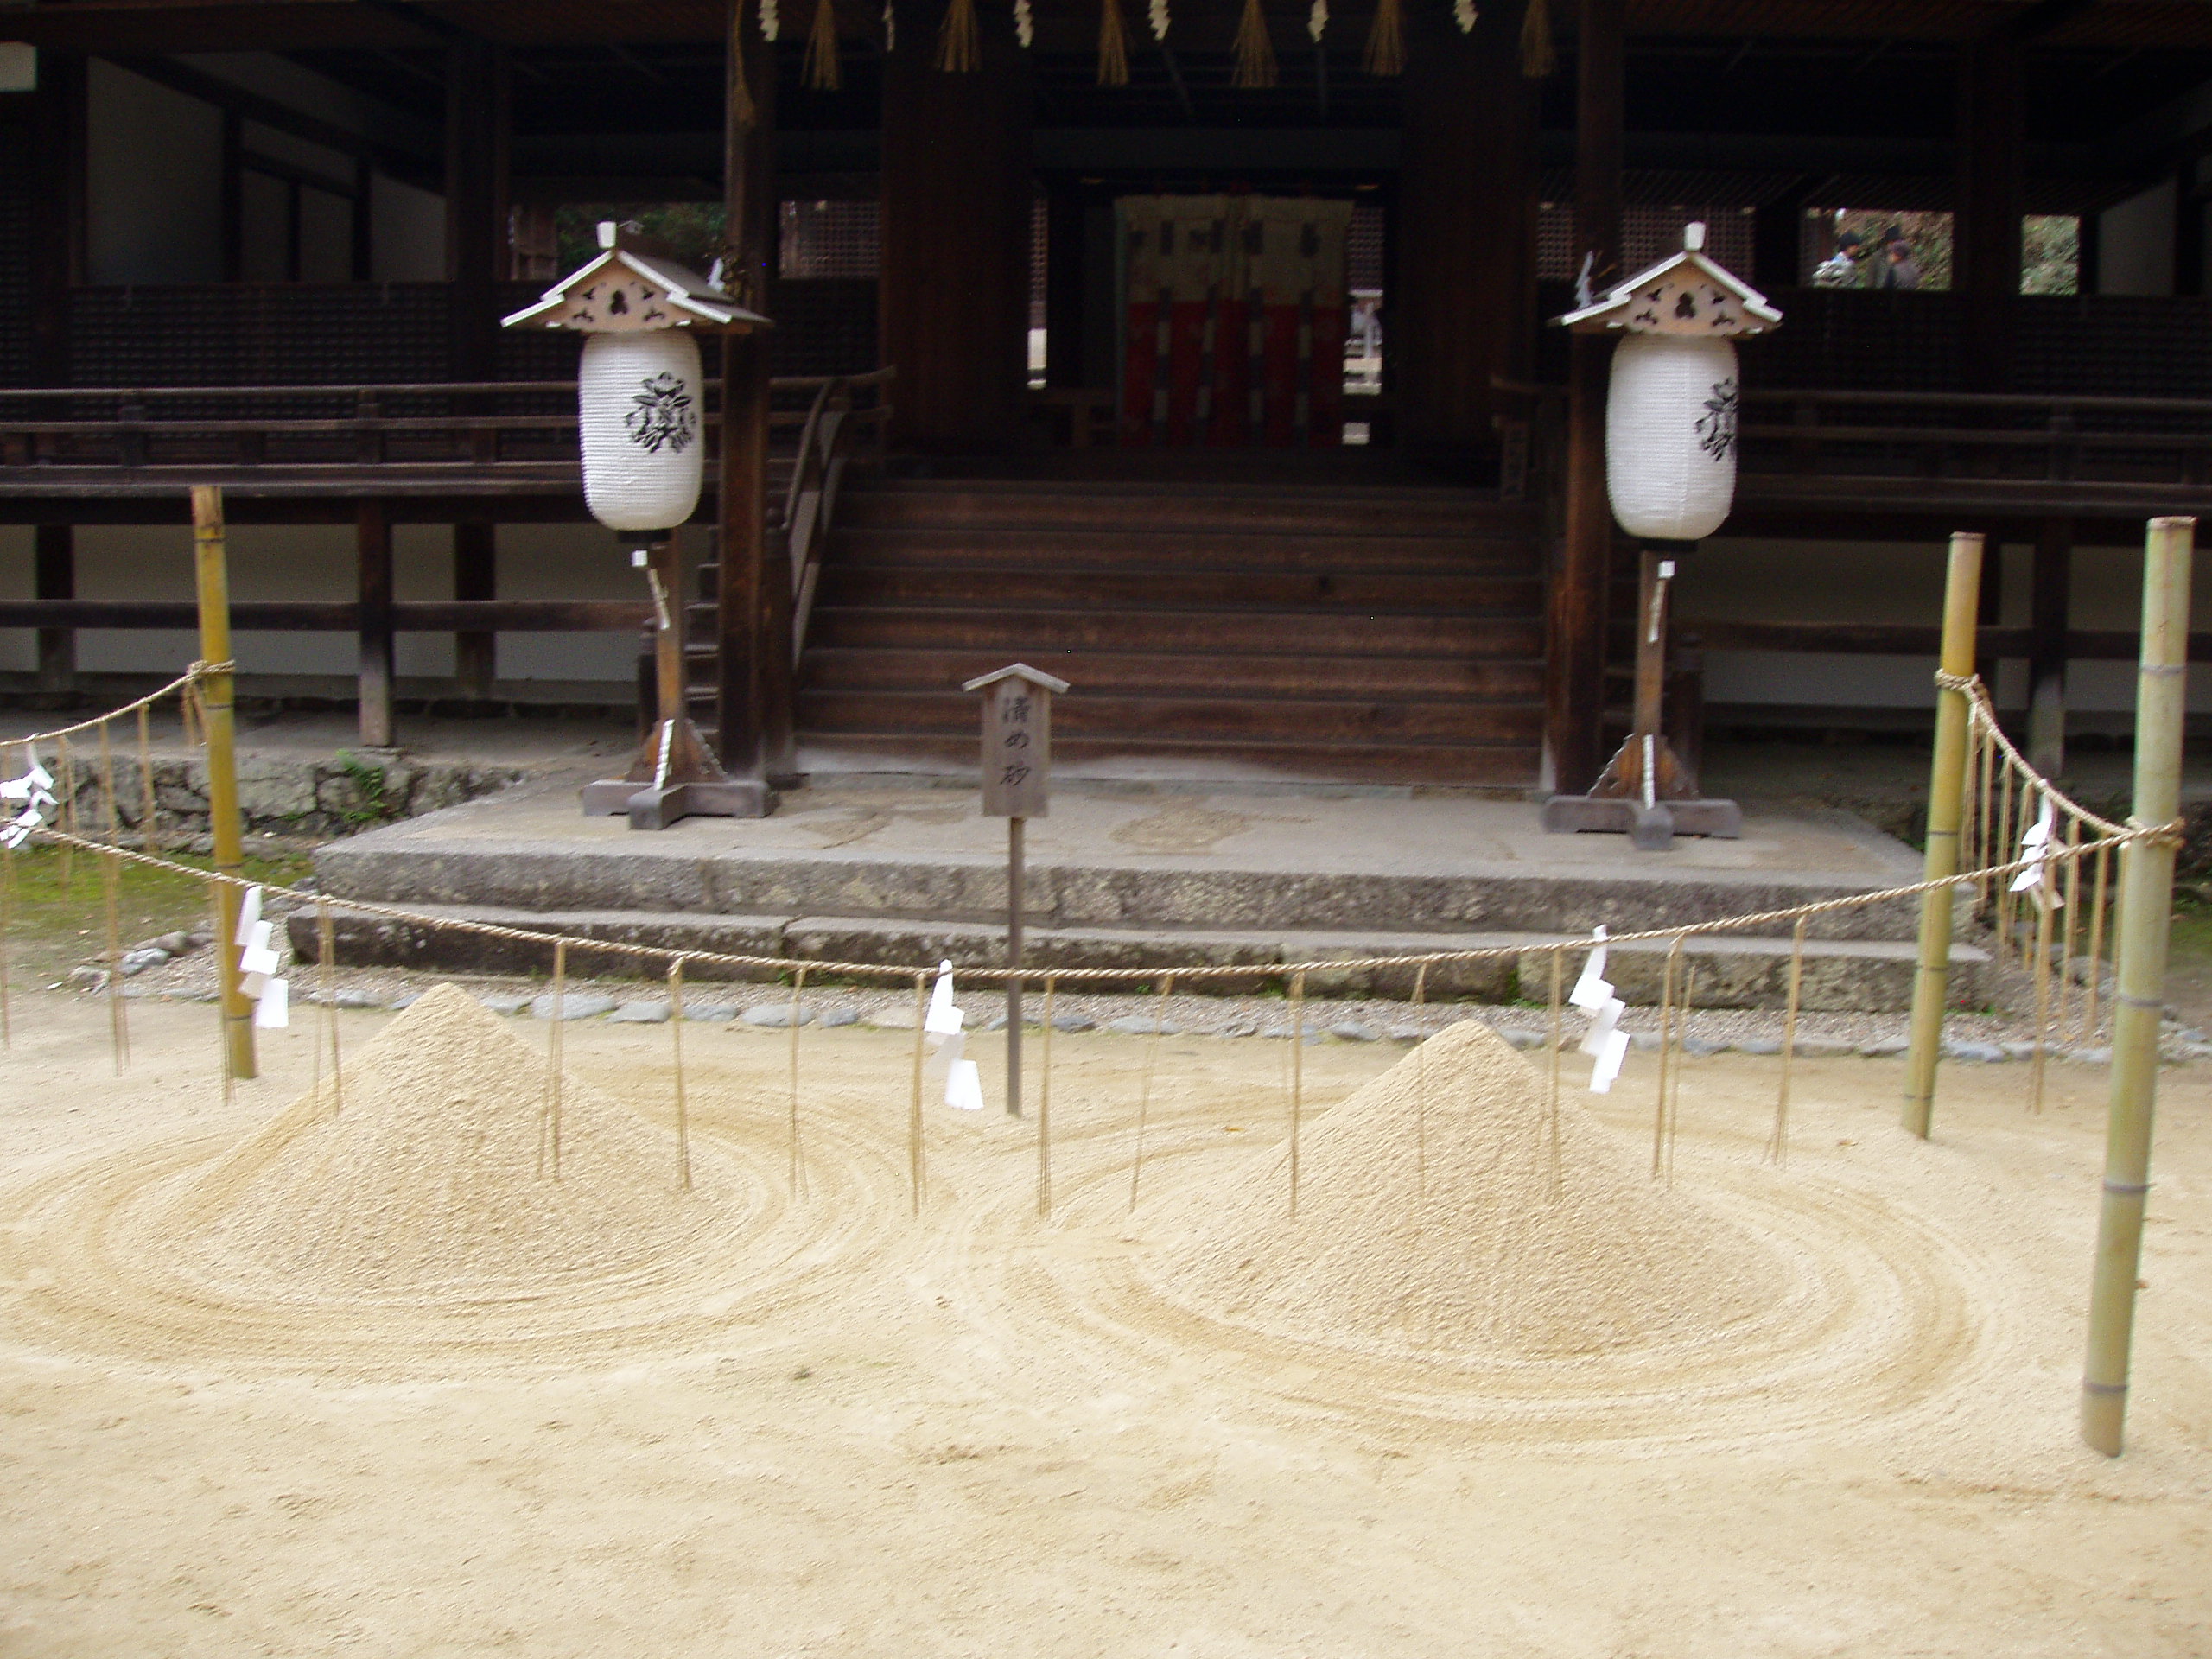 Kyoto, elaborate sand arrangement